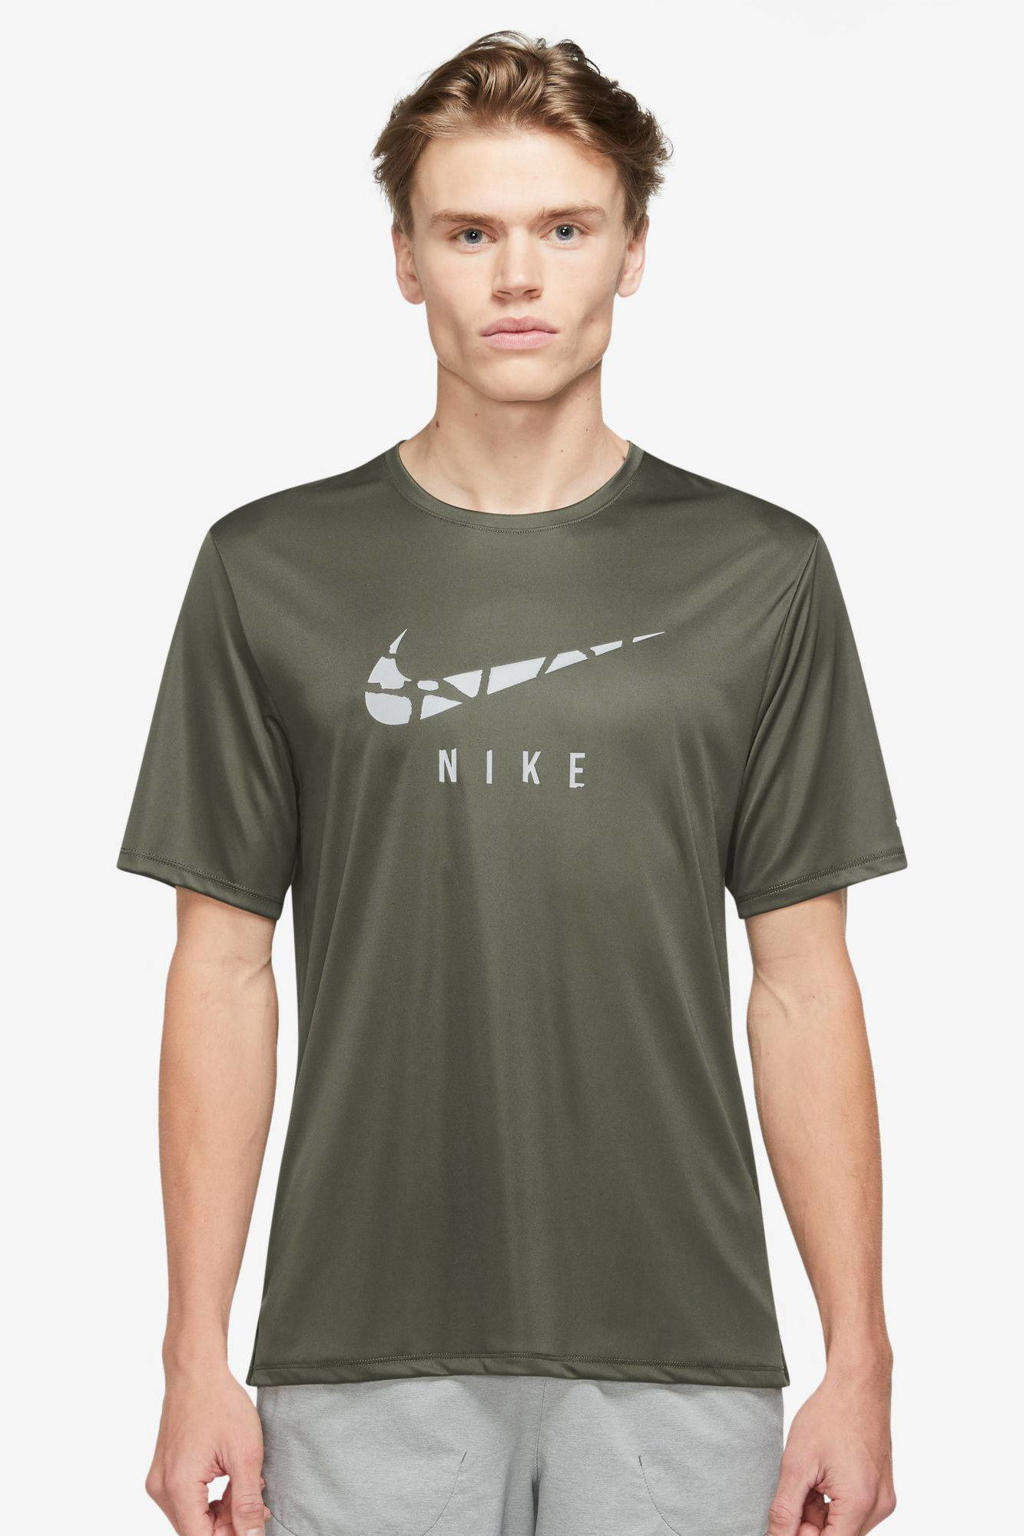 Nike   hardloopshirt donkergroen